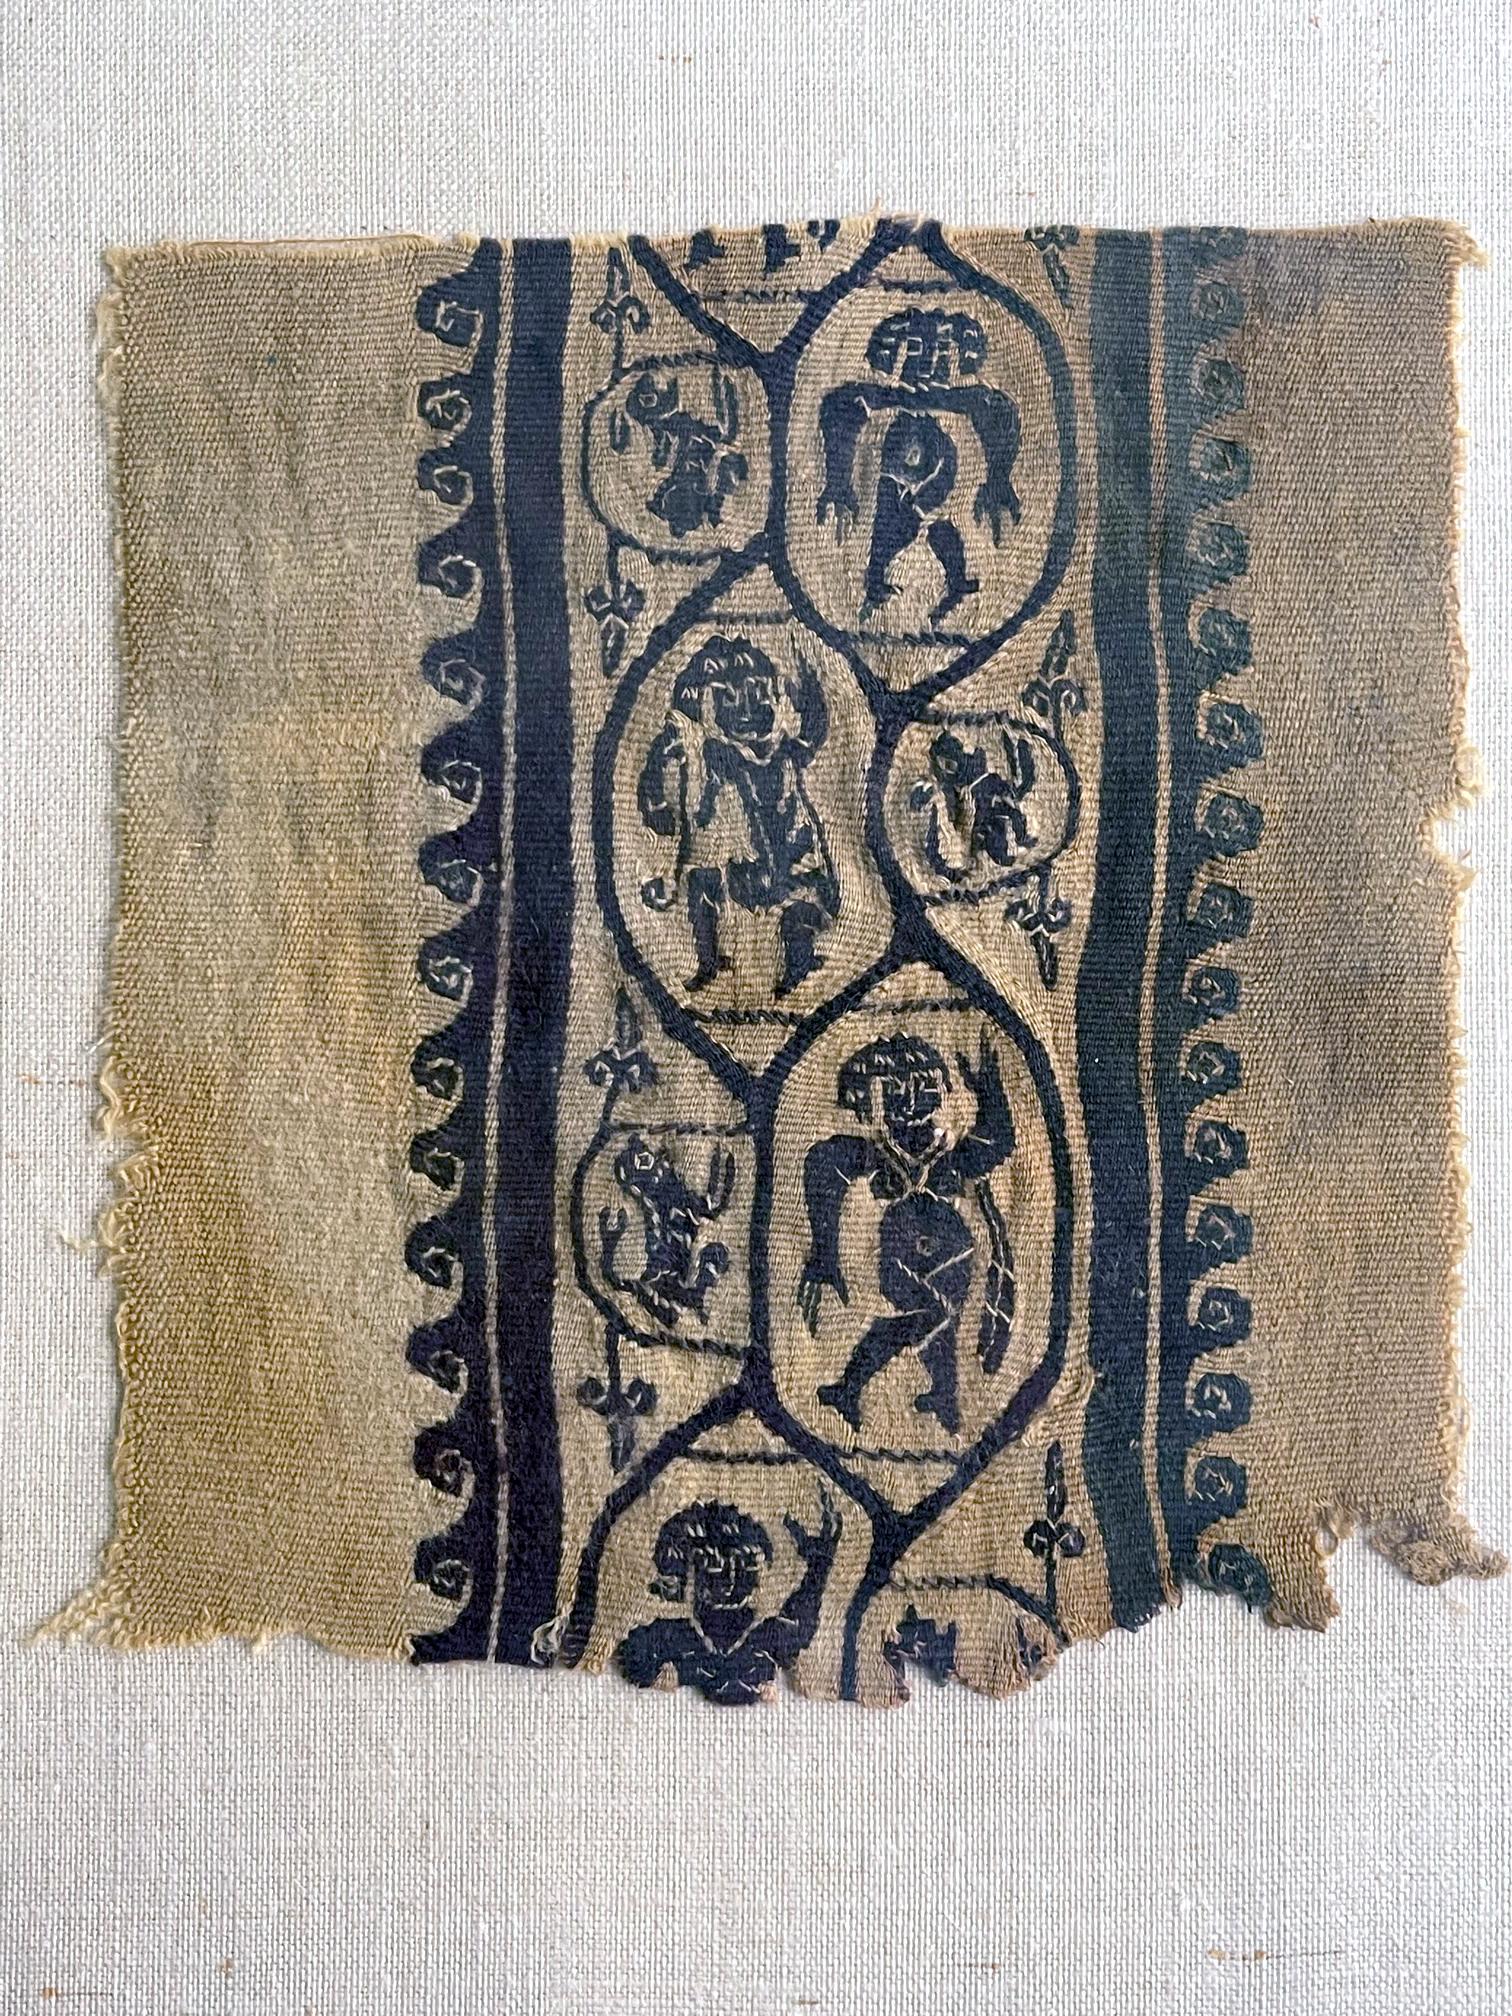 framing textile art